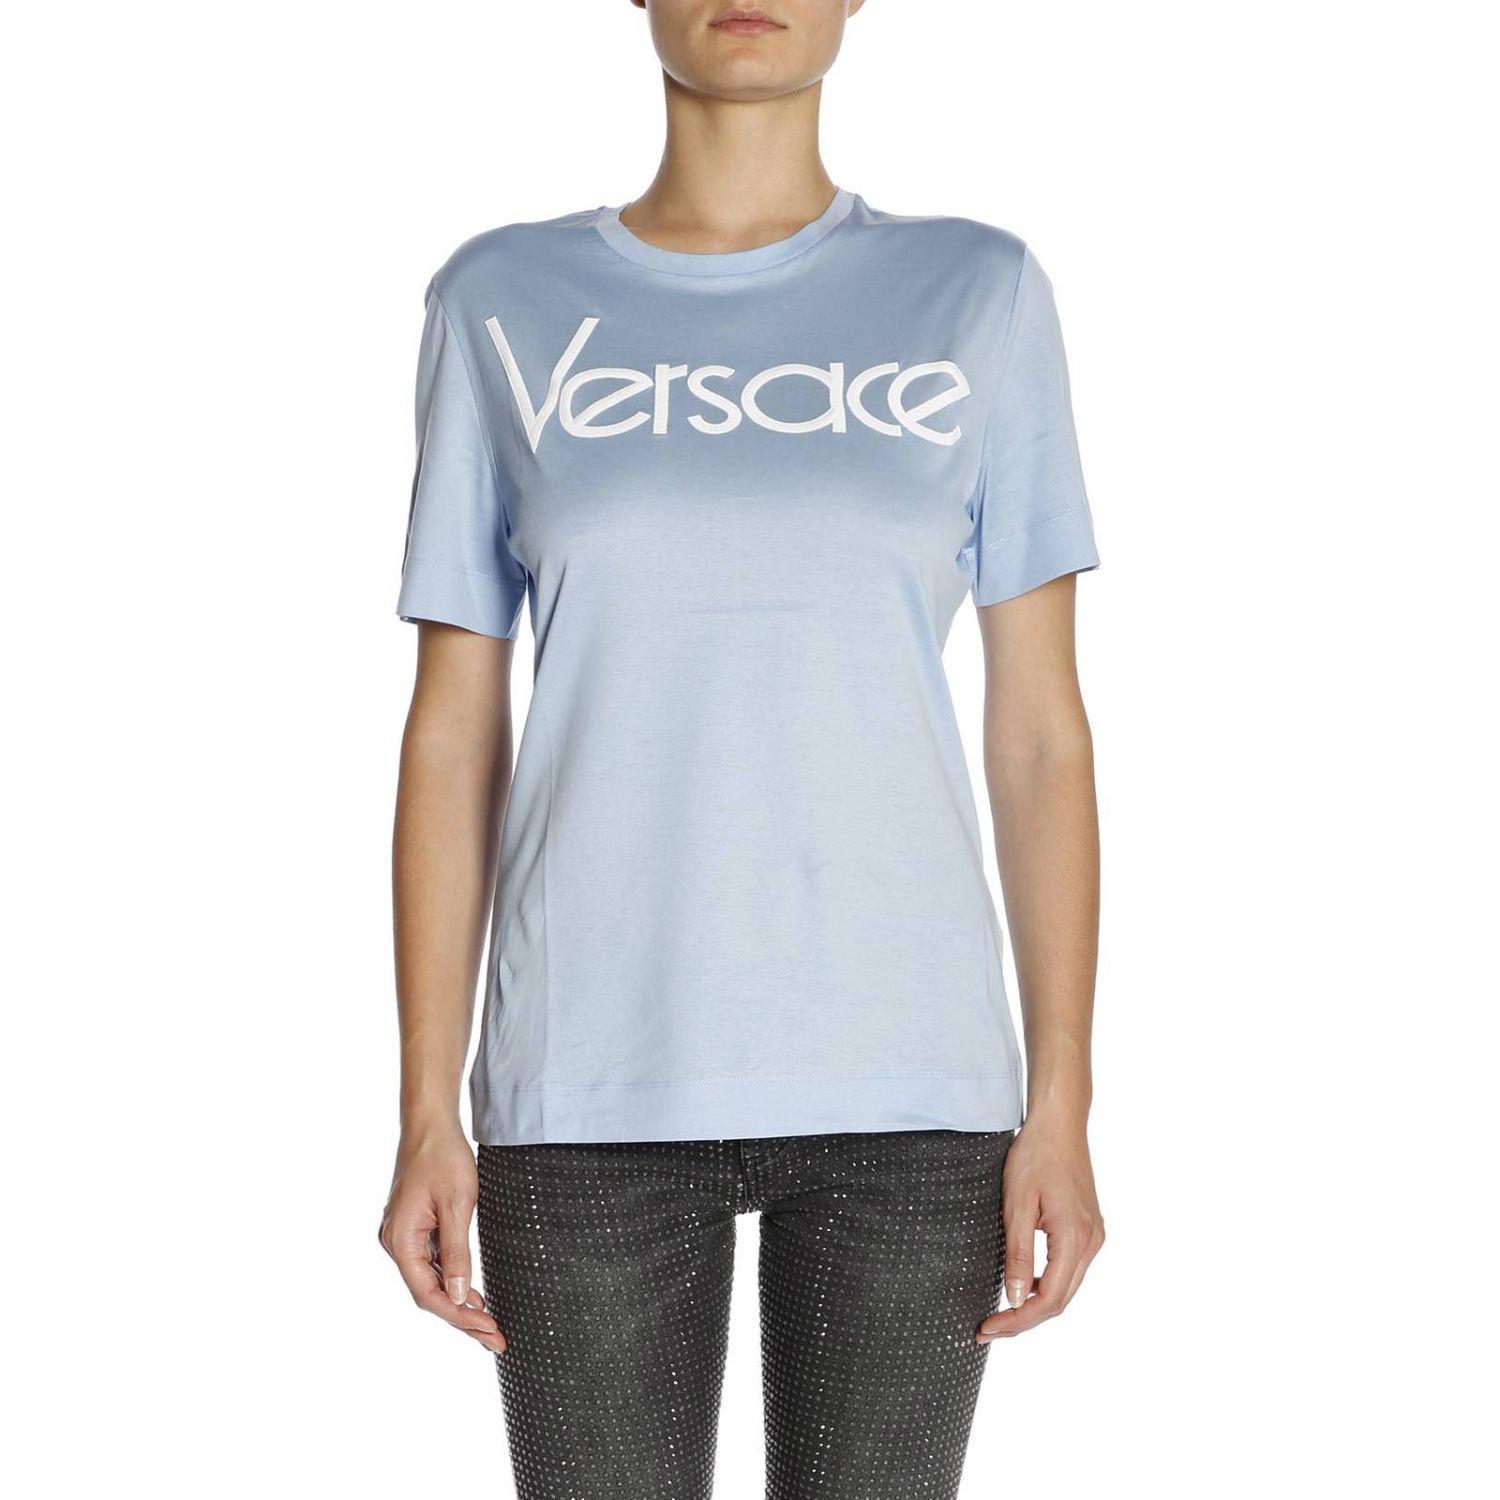 Versace T-shirt Women in Sky Blue (Blue 